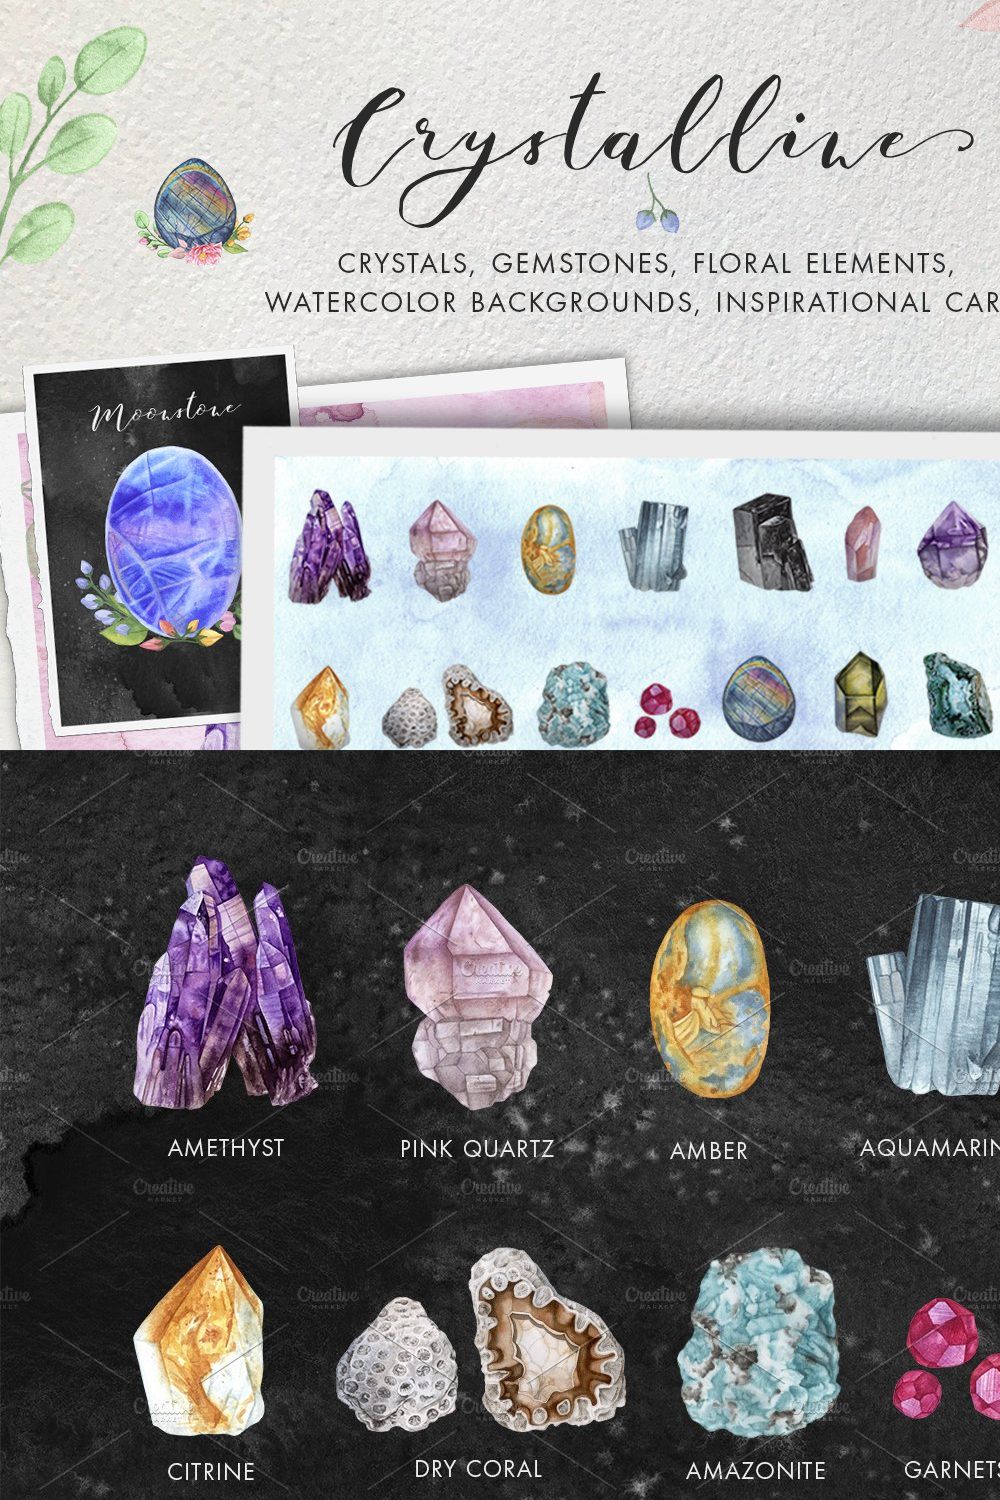 Crystalline. Crystals & Gemstones pinterest preview image.